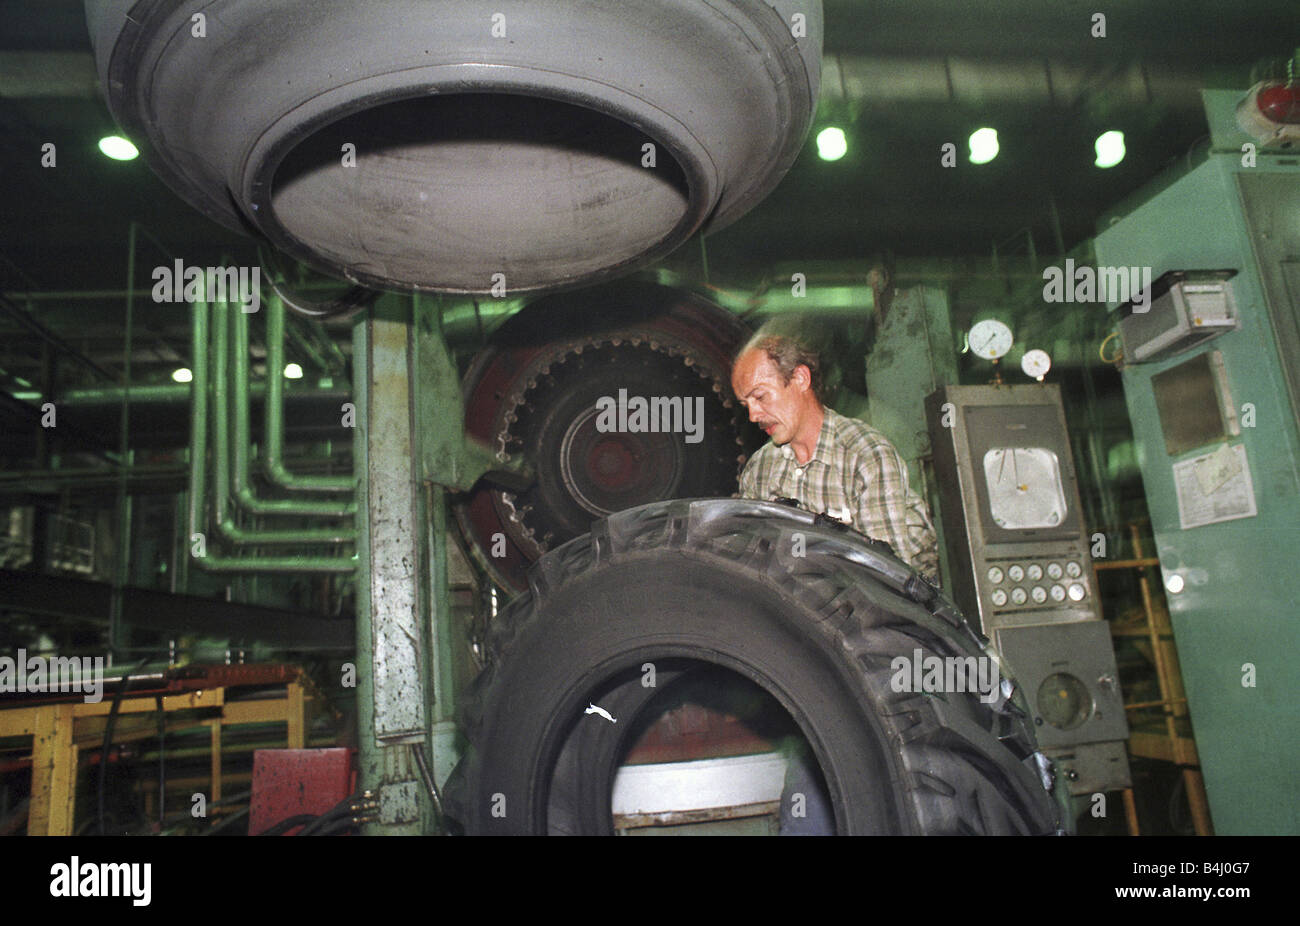 Arbeiter in der Reifenfabrik Stomil Olsztyn, Polen Stockfotografie - Alamy